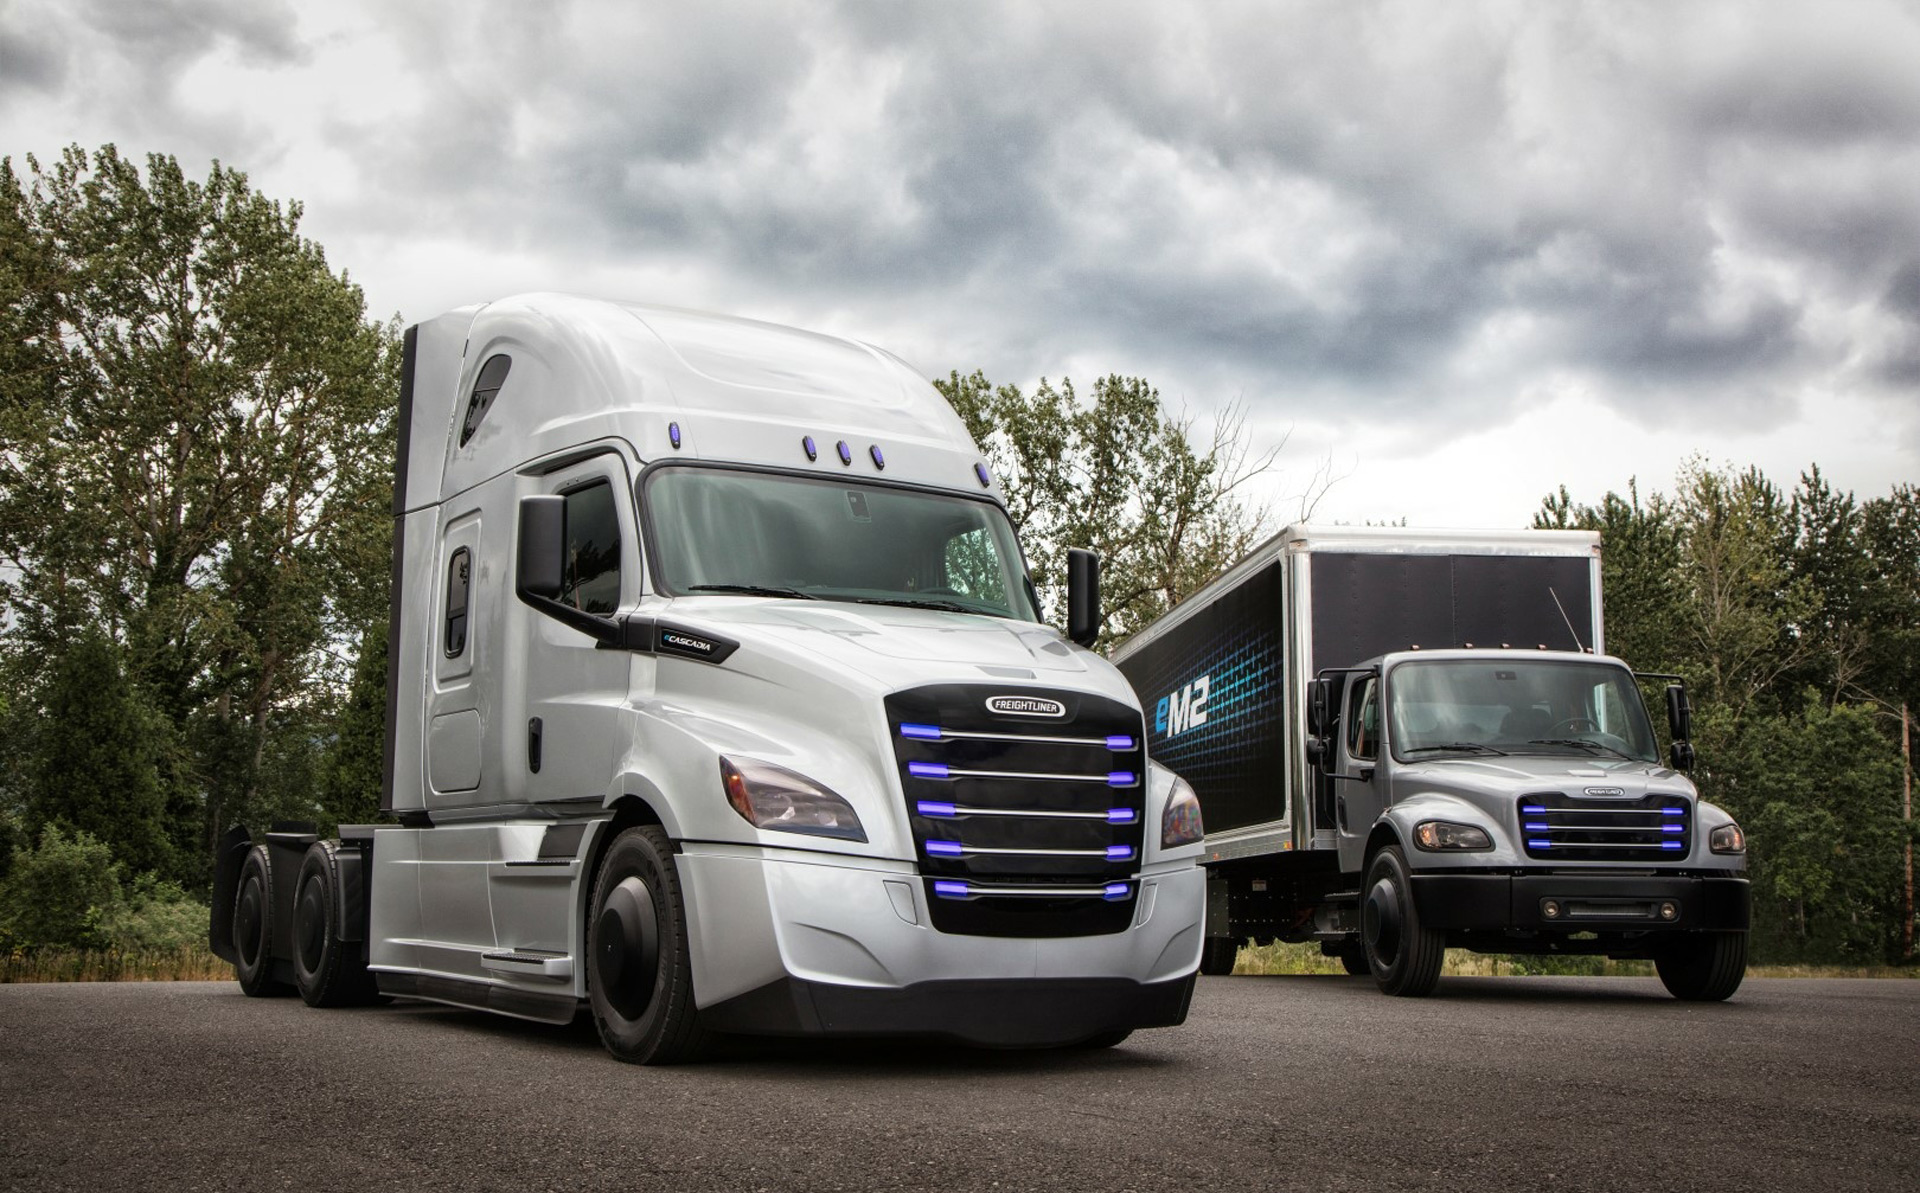 Electric trucks from Daimler's Freightliner brand